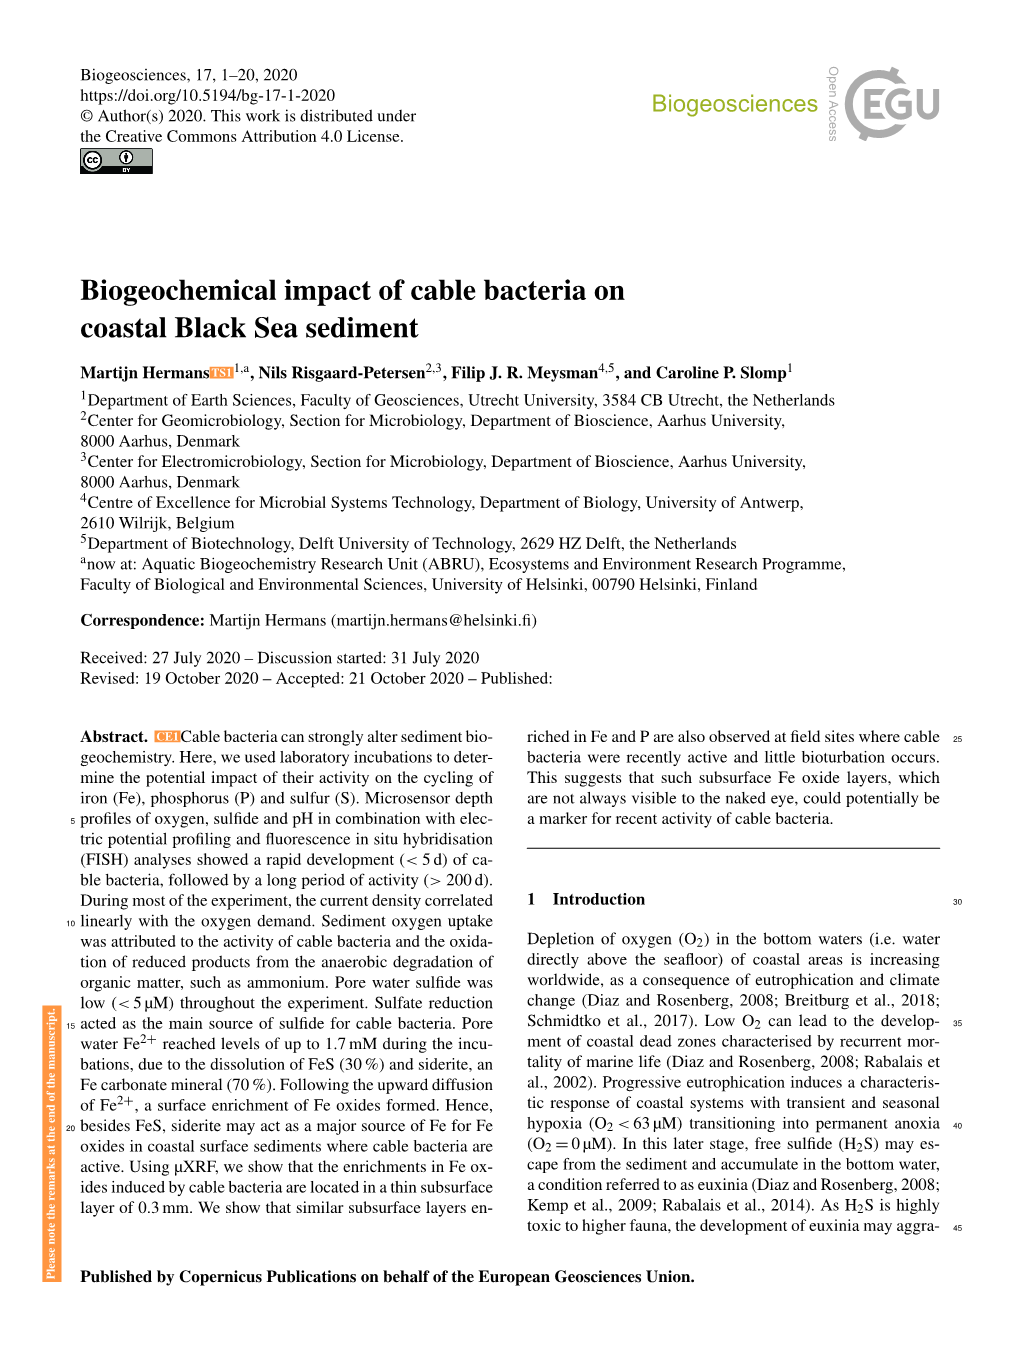 Biogeochemical Impact of Cable Bacteria on Coastal Black Sea Sediment